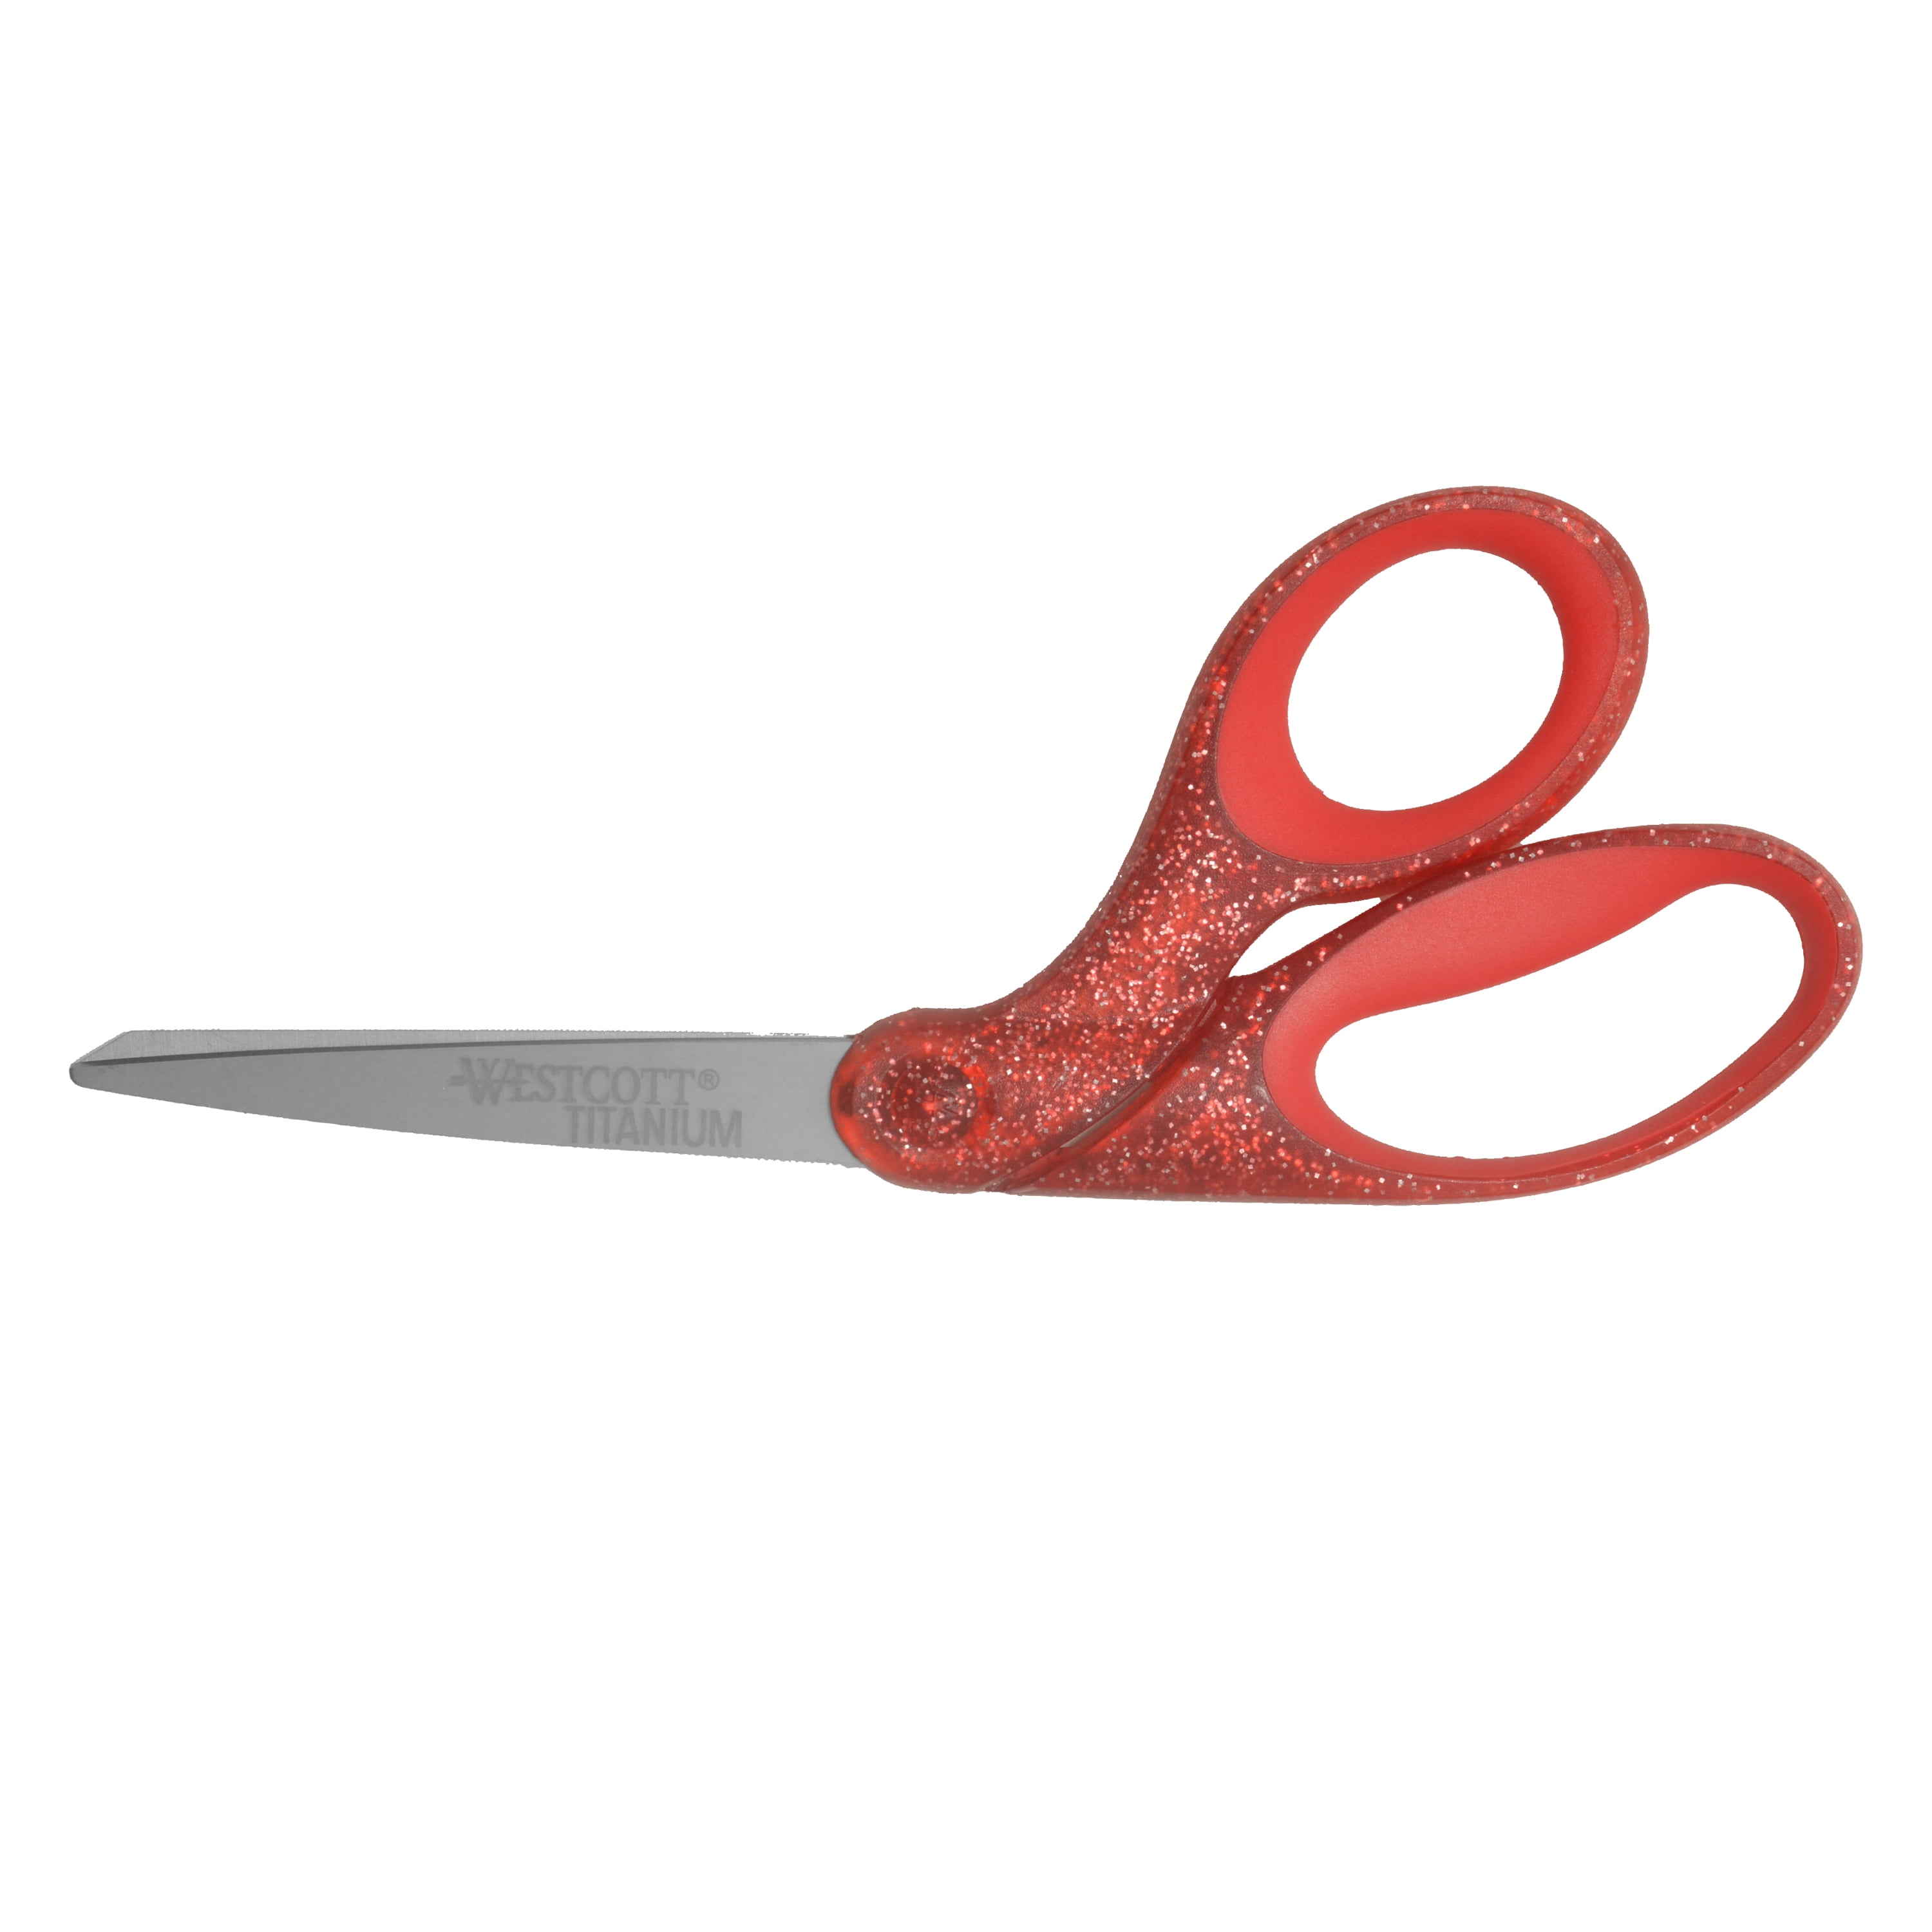 Vintage red scissors maker badge gift for artist knitters sewist